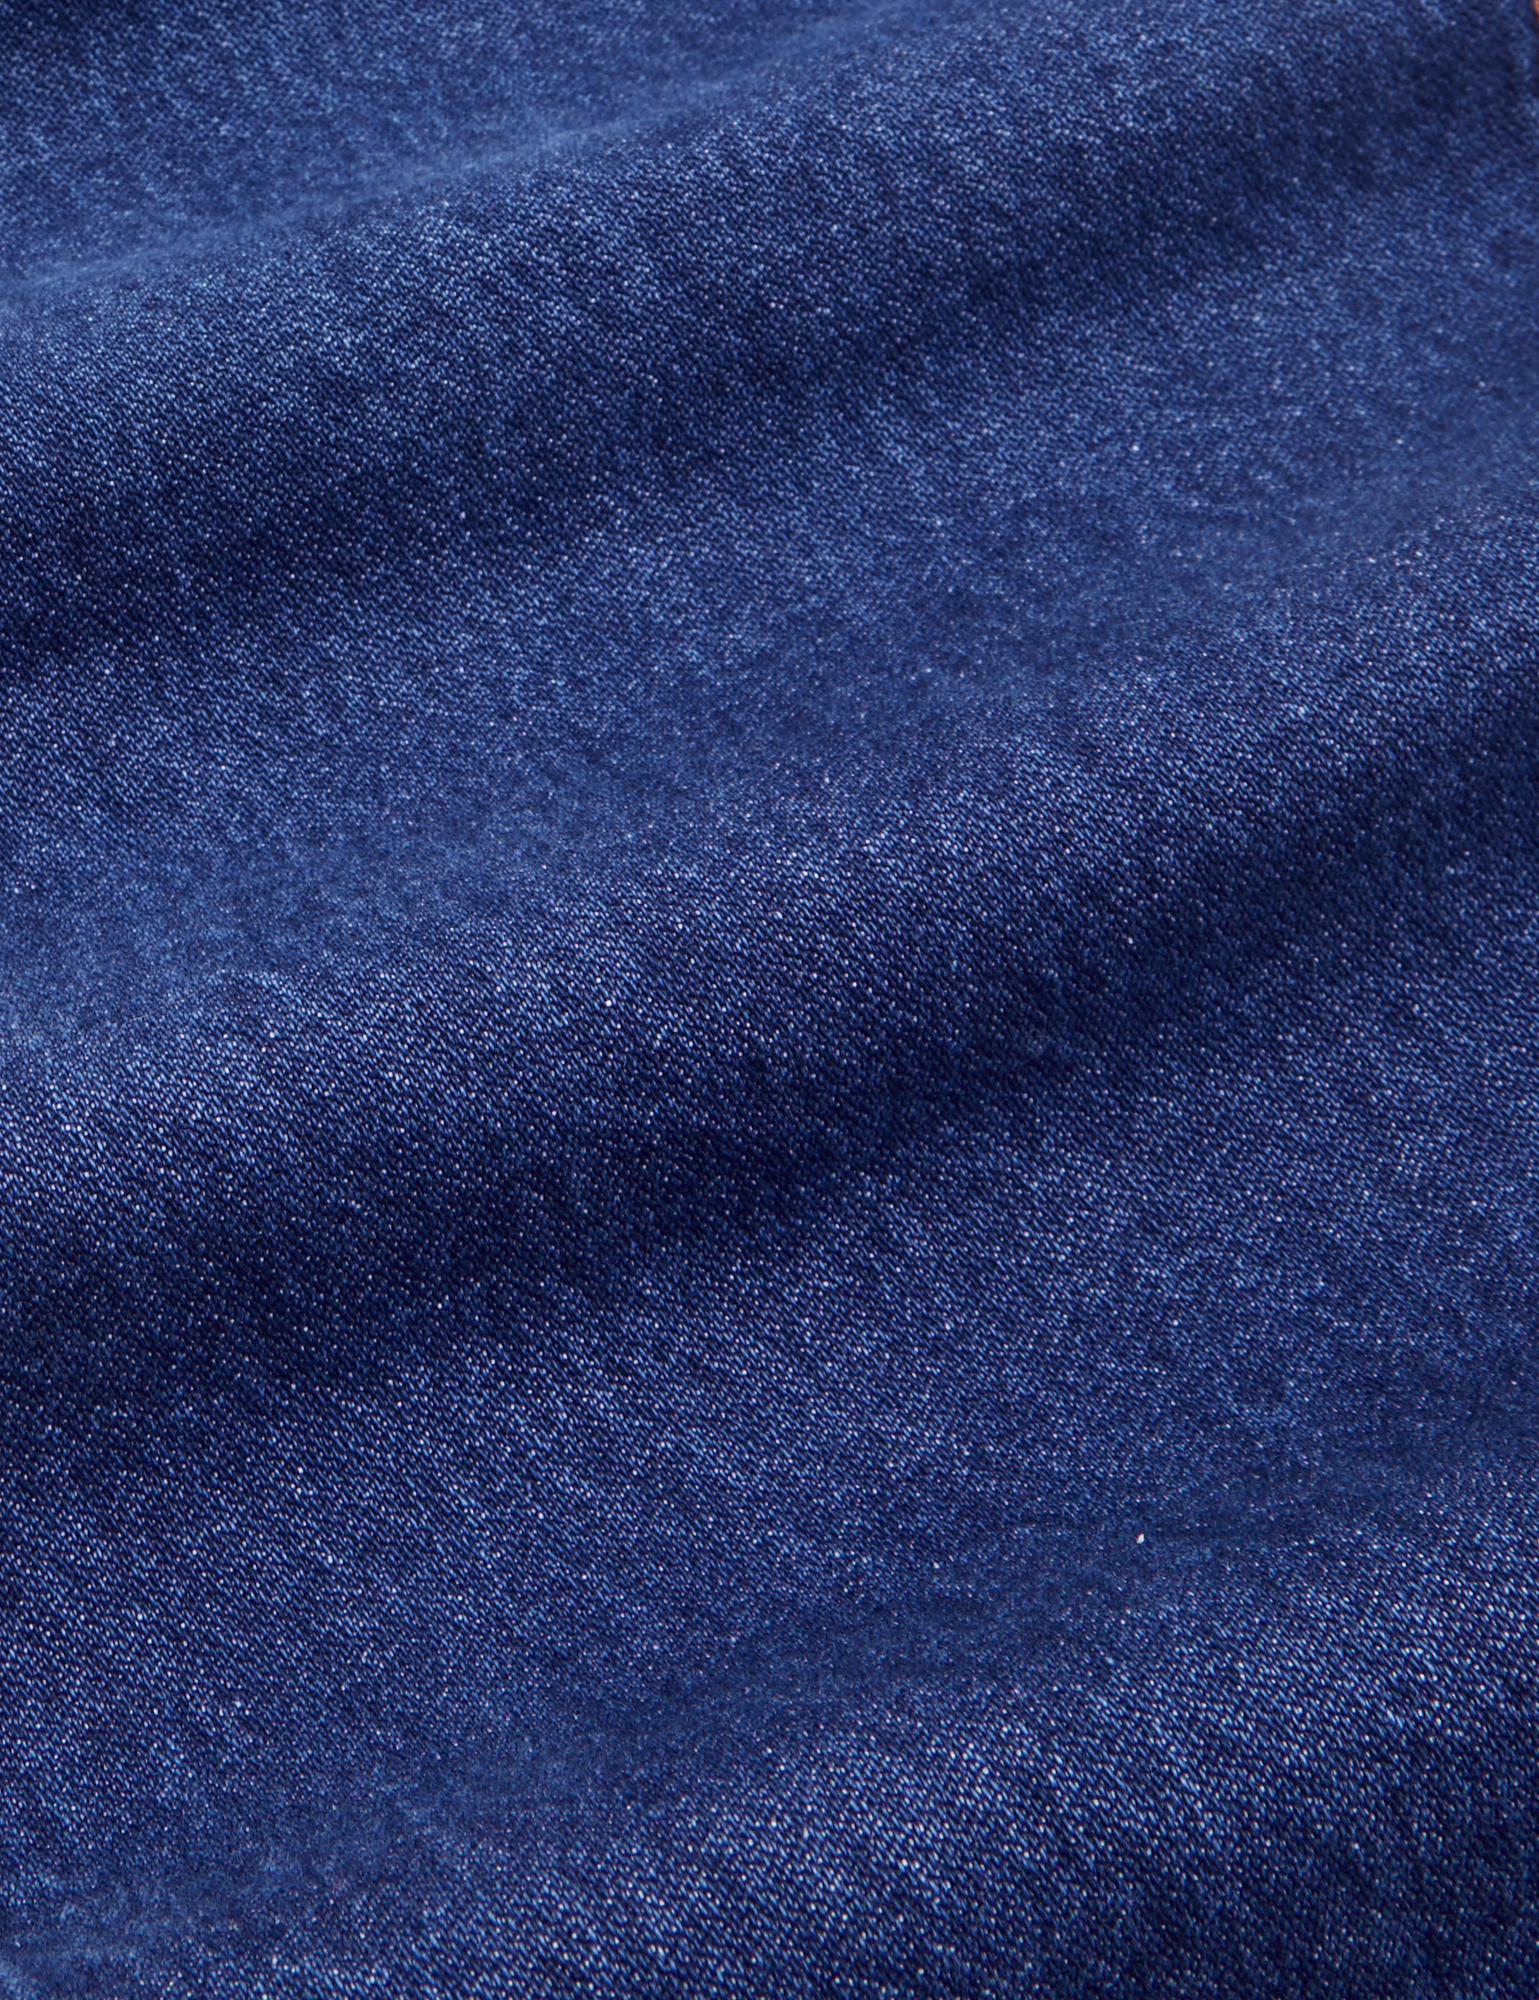 Indigo Denim Original Overalls - Dark Wash – BIG BUD PRESS, Denim Fabric 